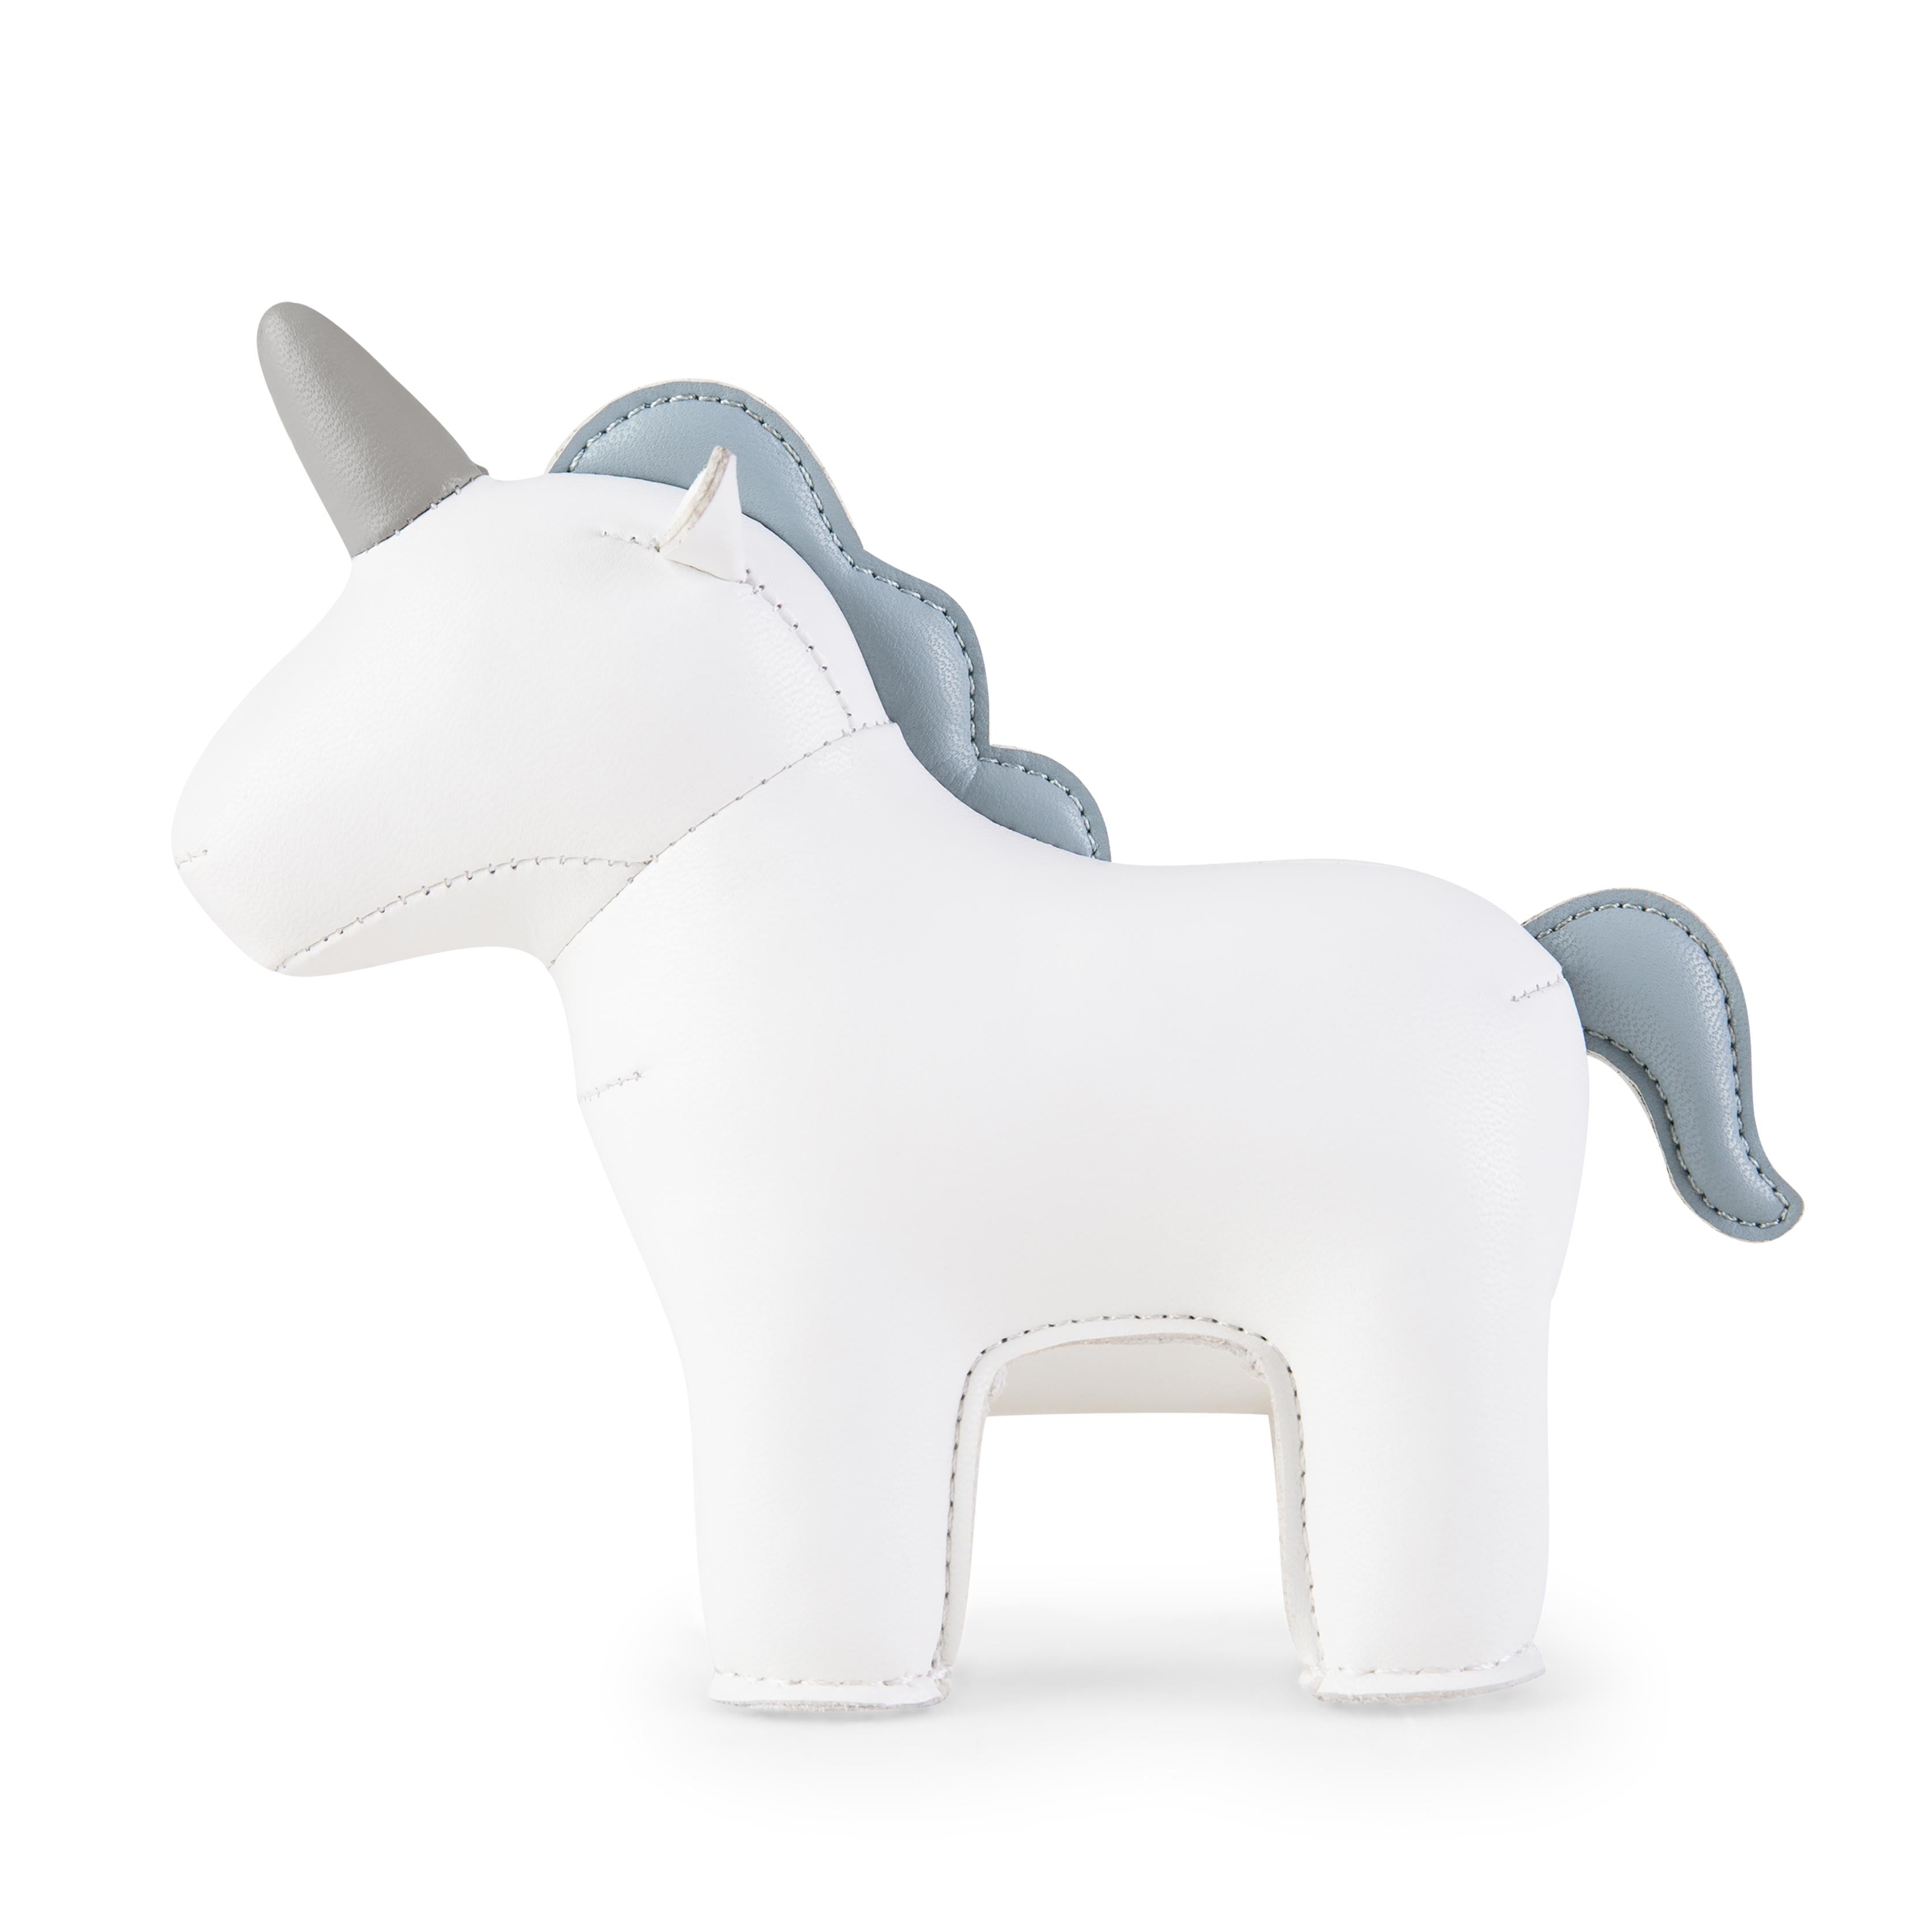 Zuny Unicorn Nico Paperweight,White + SmokyBlue